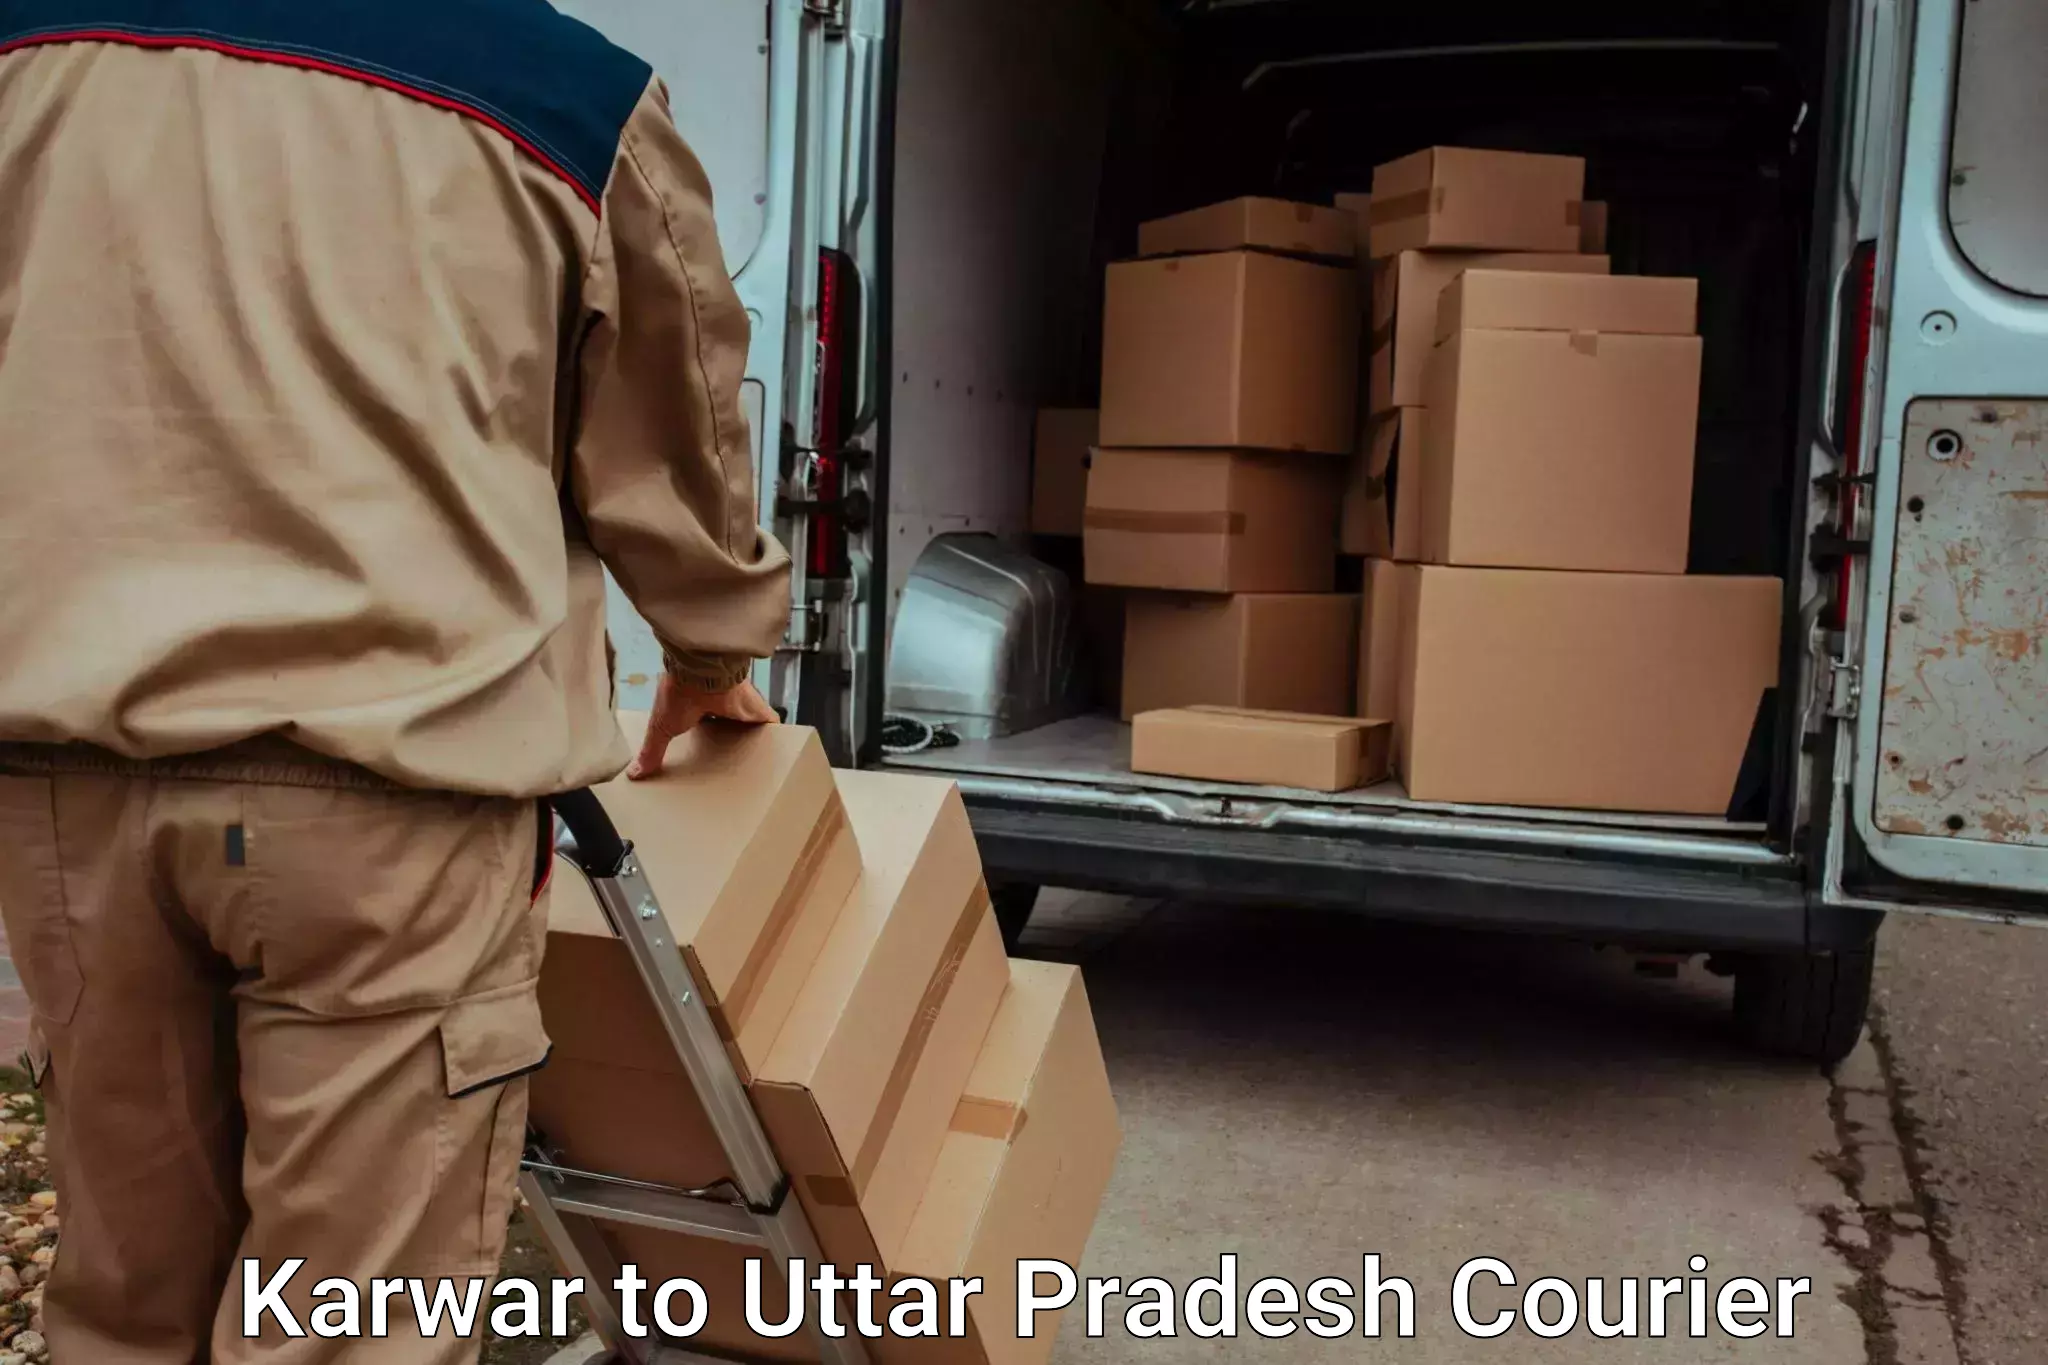 Luggage transfer service in Karwar to Sikandrabad